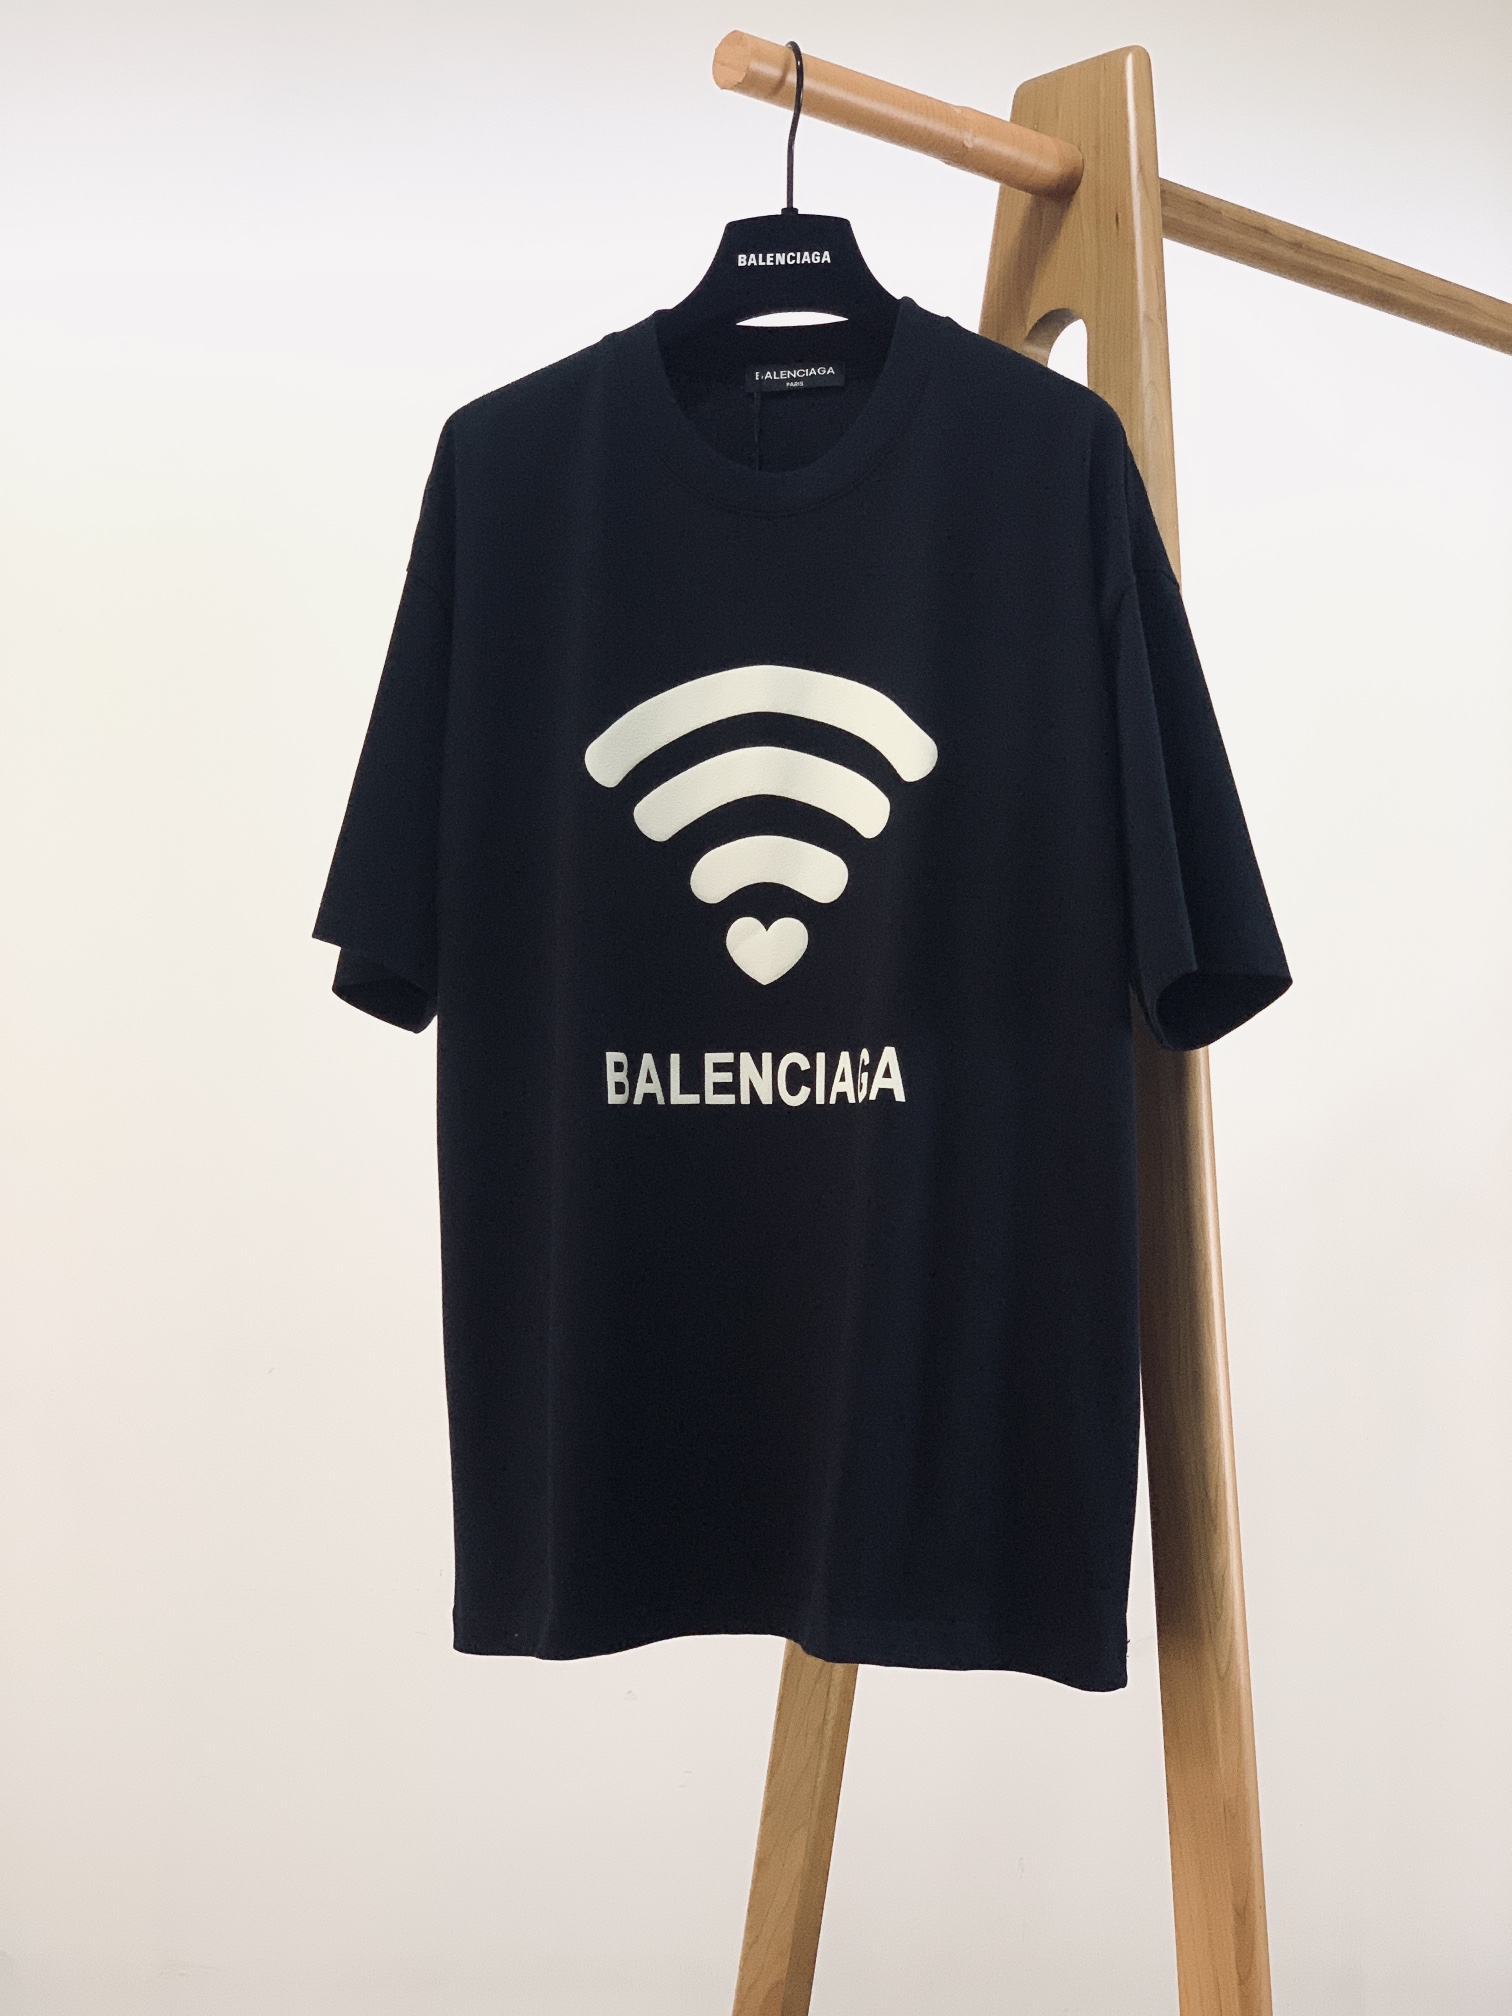 Balenciaga Clothing T-Shirt Printing Unisex Spring/Summer Collection Fashion